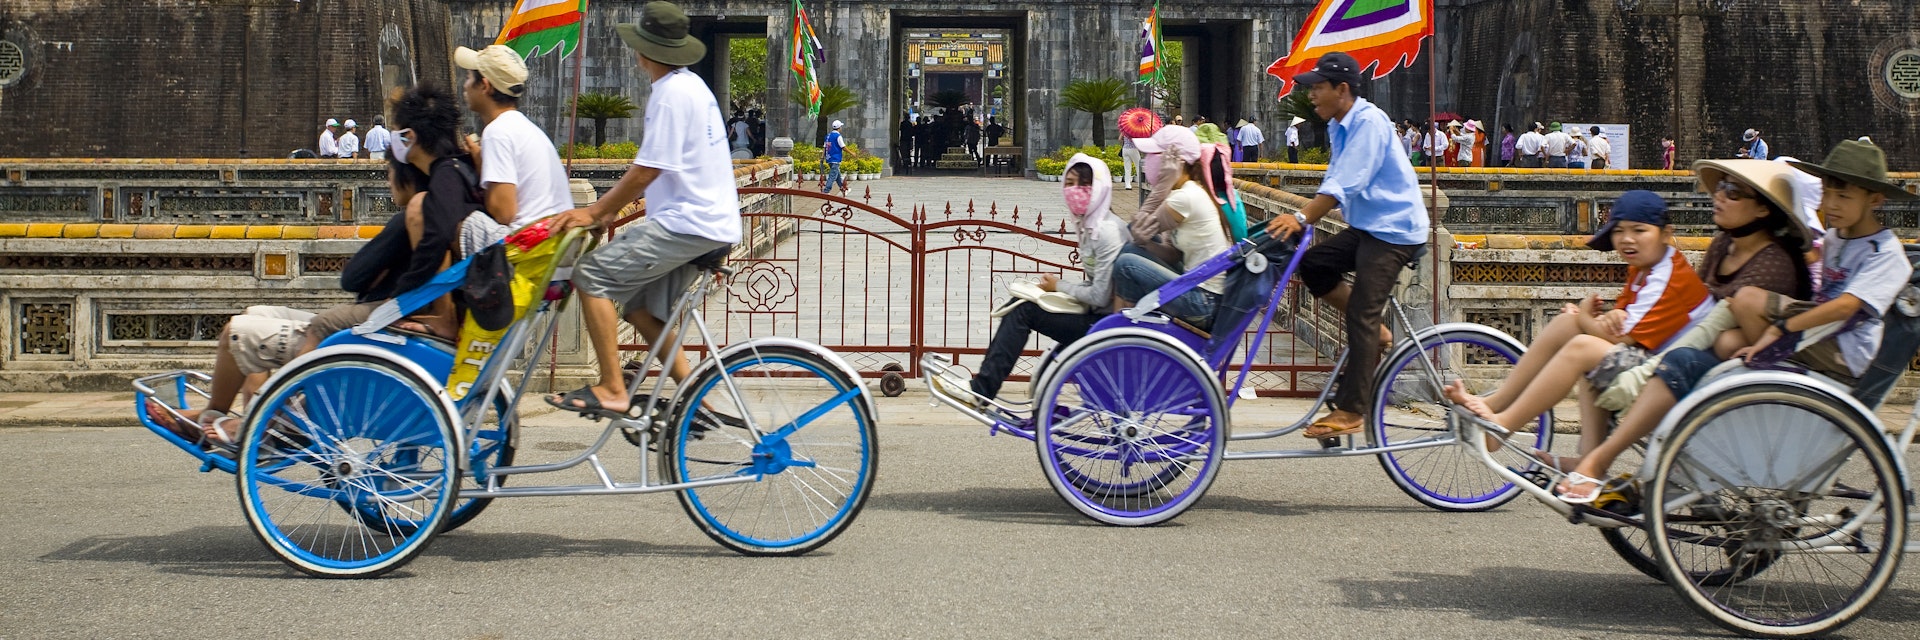 3 JUNE 2011 - Cycle rickshaws (cyclo's) ride past the Ngo Mon Gate of the palace inside the Hue citadel, on 3 June 2011, in Hue.
166696646
architecture, citadel, gate, hue, imperial, landmark, mon, ngo, palace, vietnam